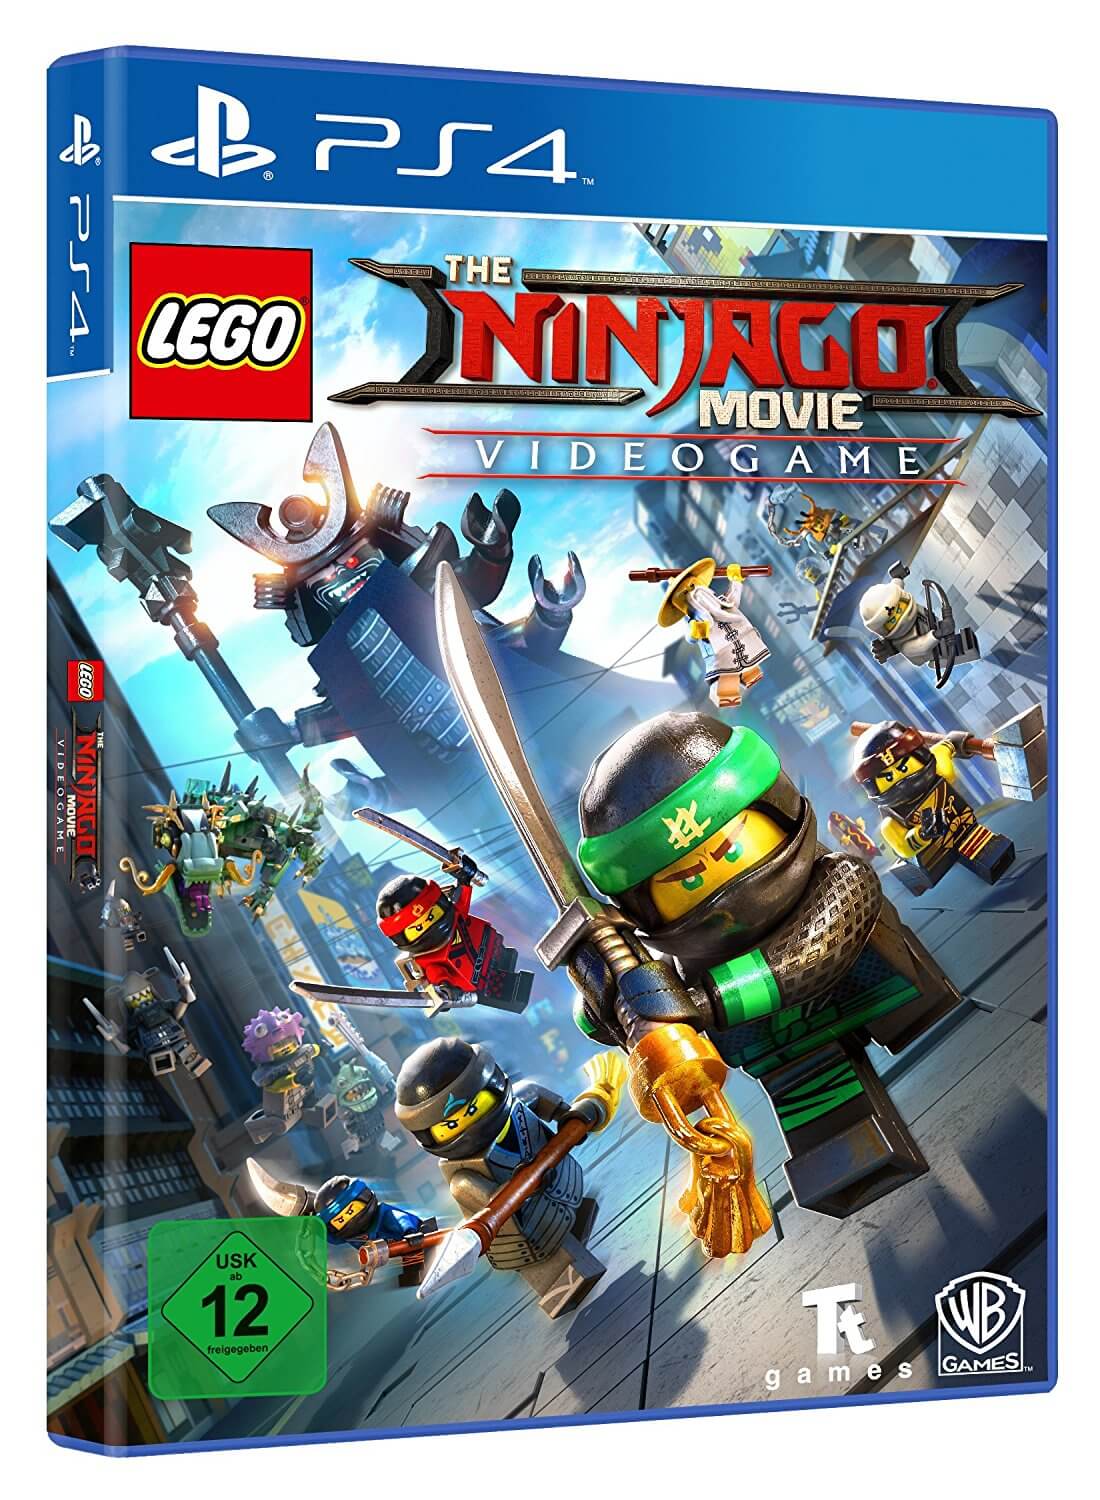 The LEGO Ninjago Movie Videogame